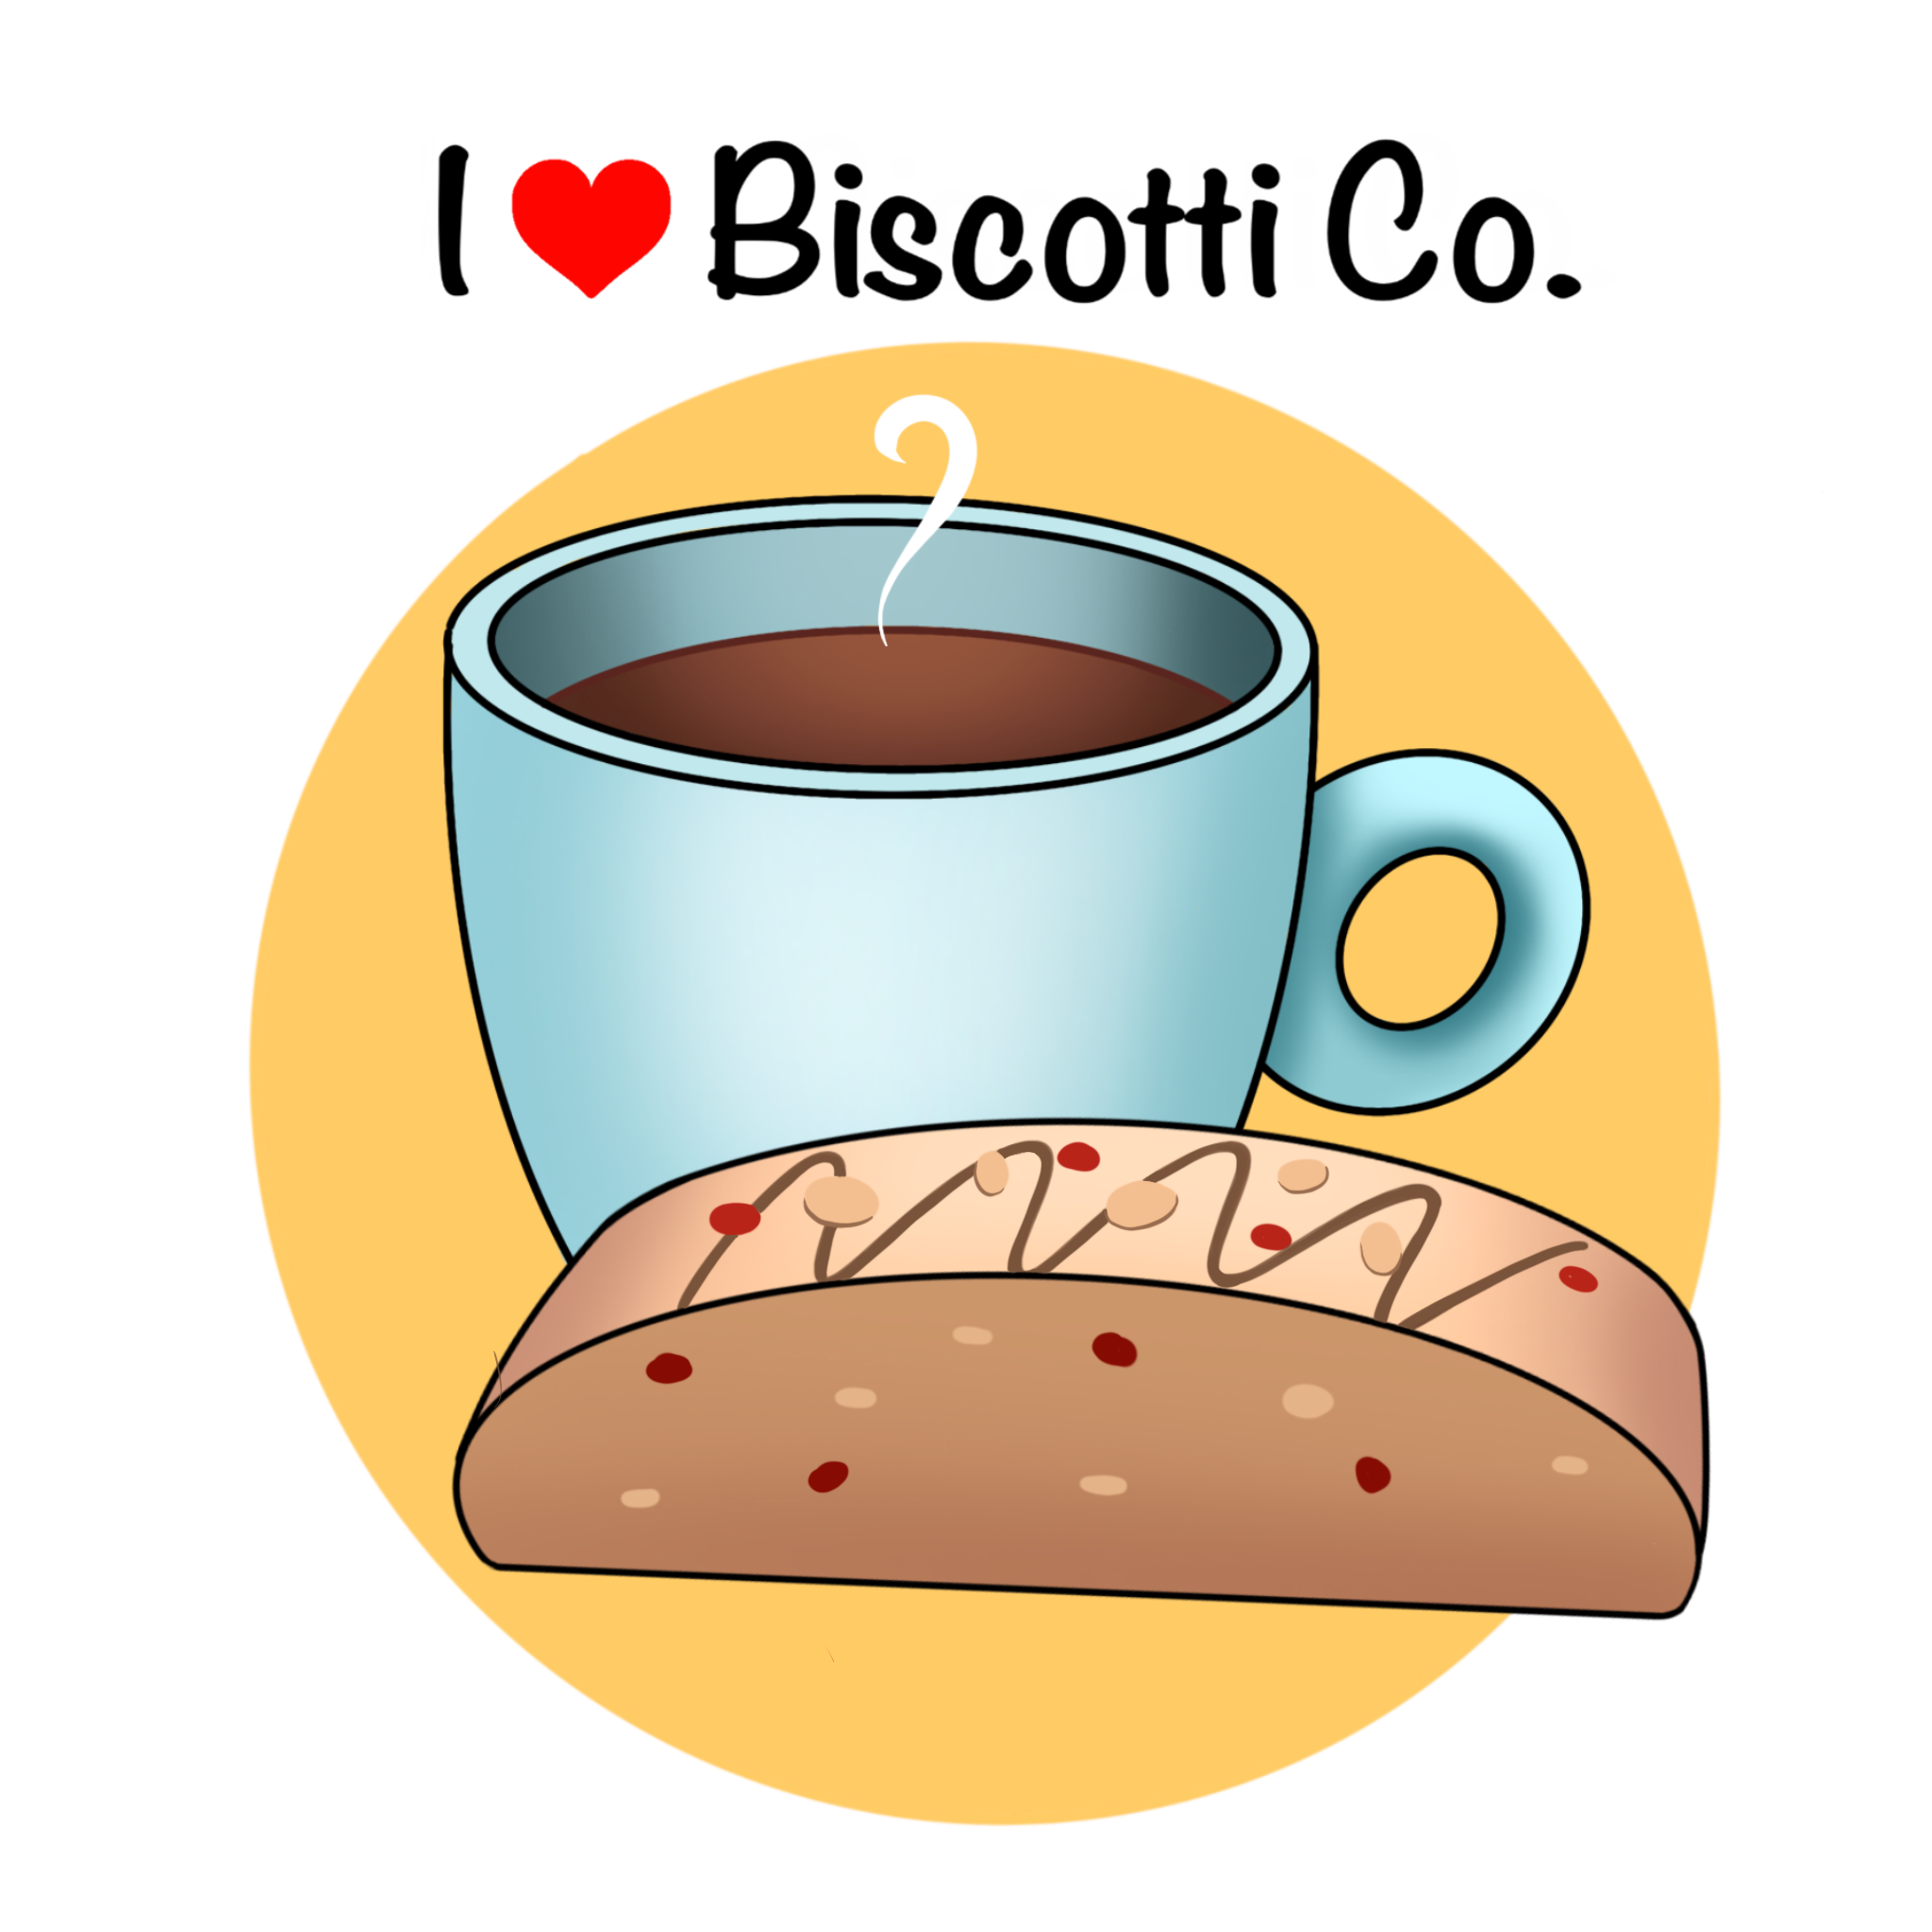 I Love Biscotti Co. Logo final